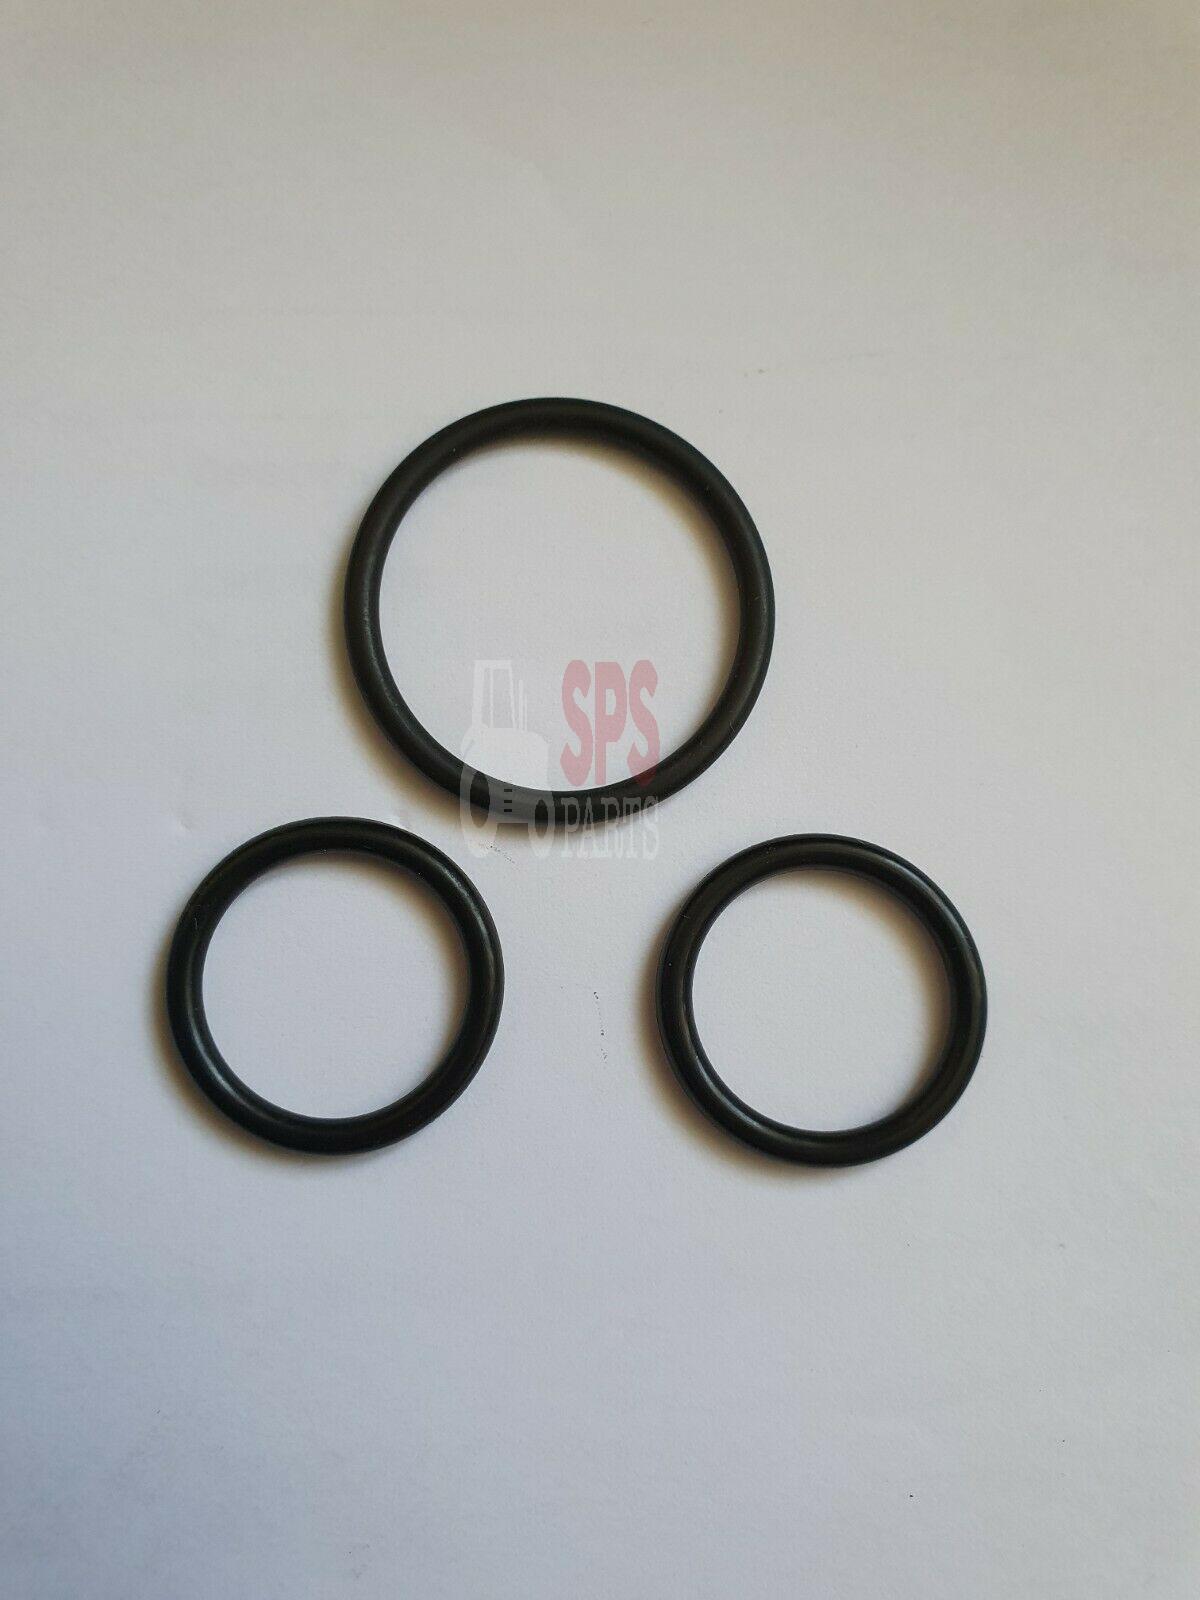 Rubber O Ring Manufacturer - G K A Rubber & Plastics Ltd